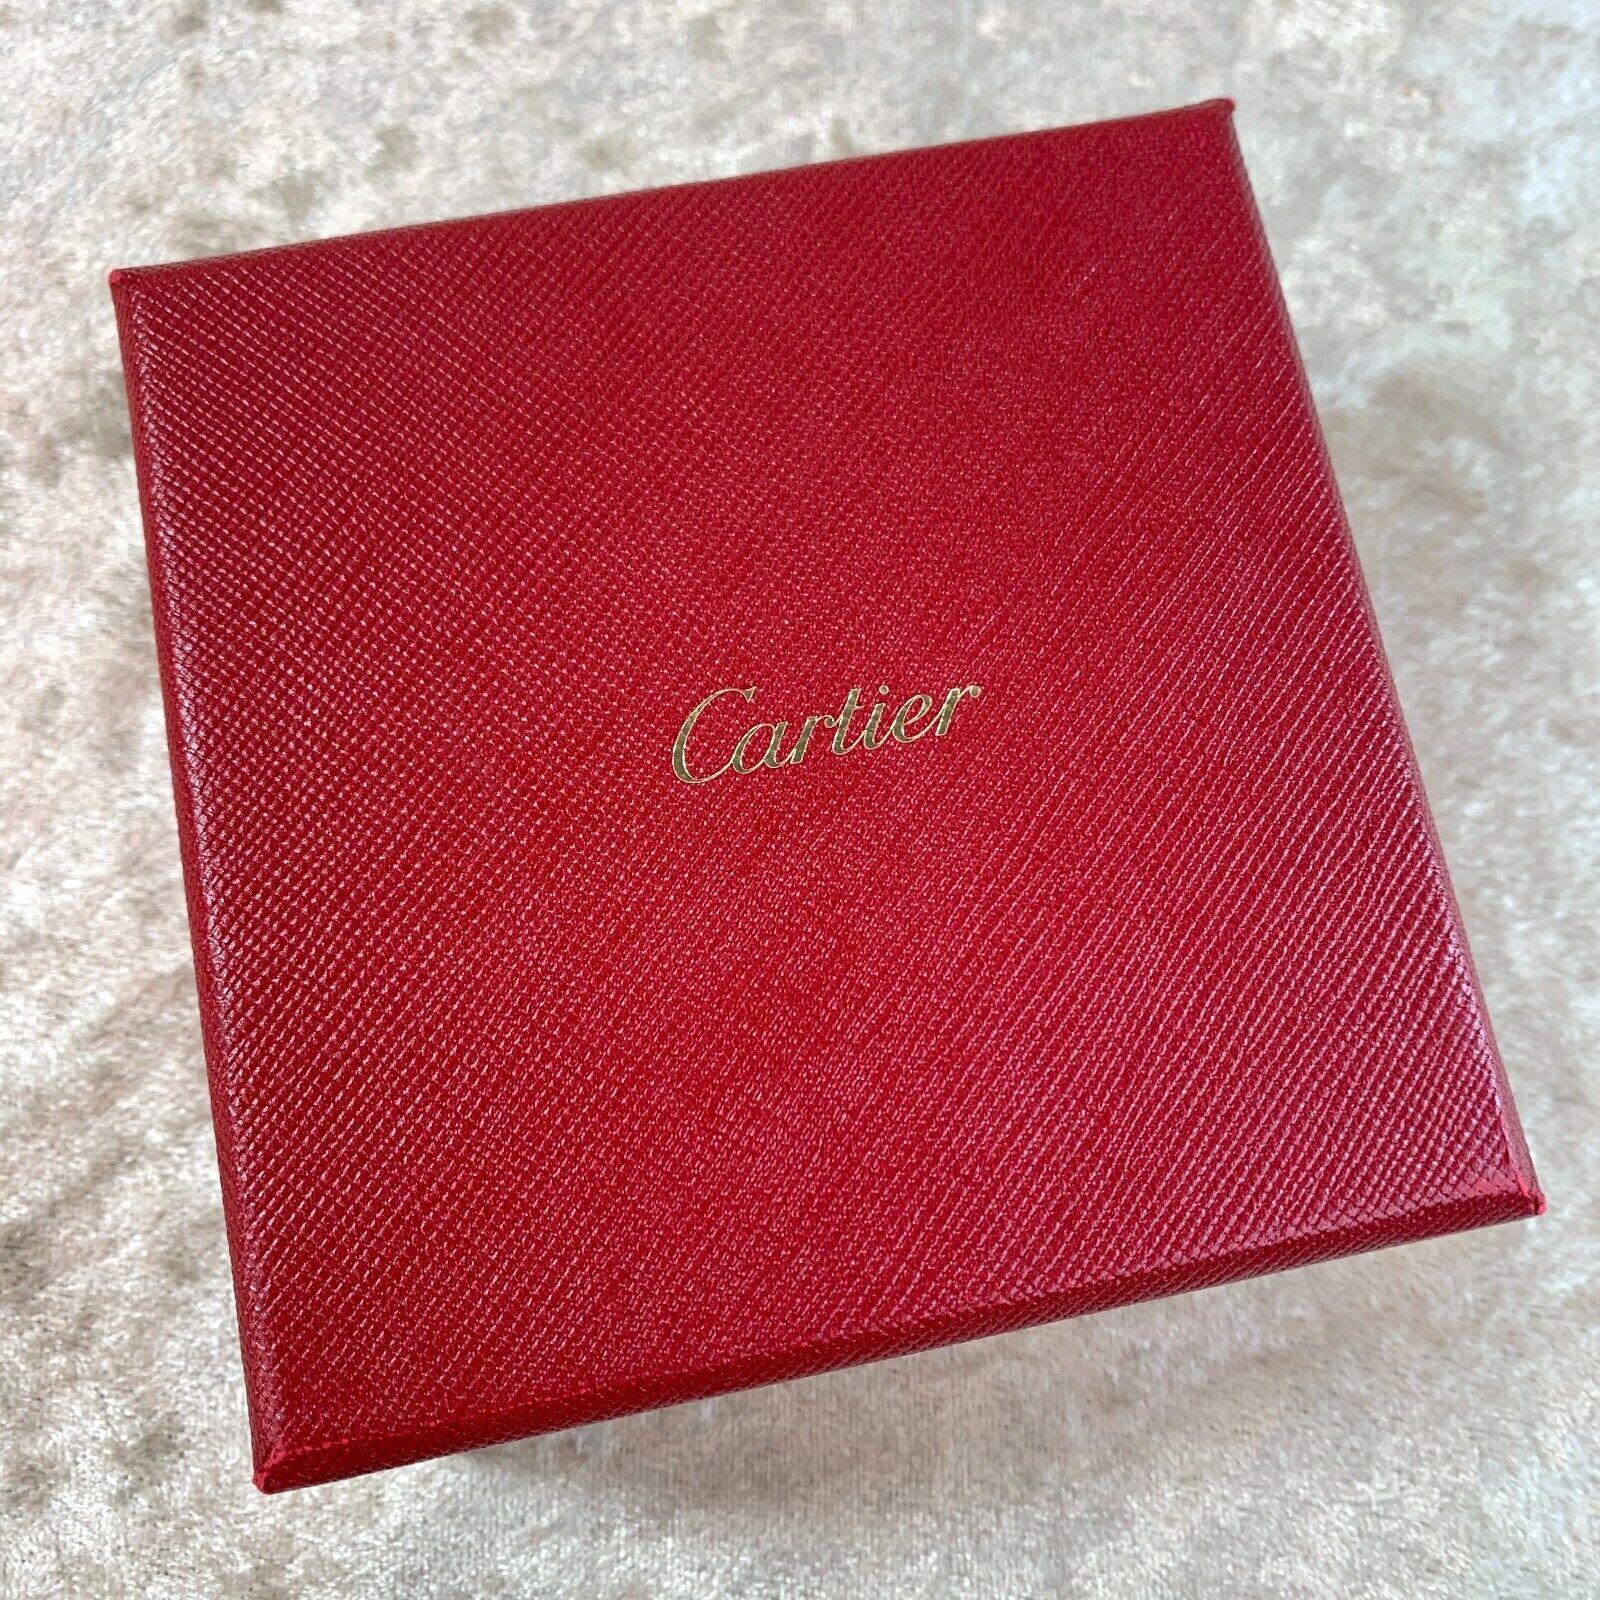 Artist Cartier “Panthere” Face Porcelain Mini Ashtray Gold Rim, Circa 2000